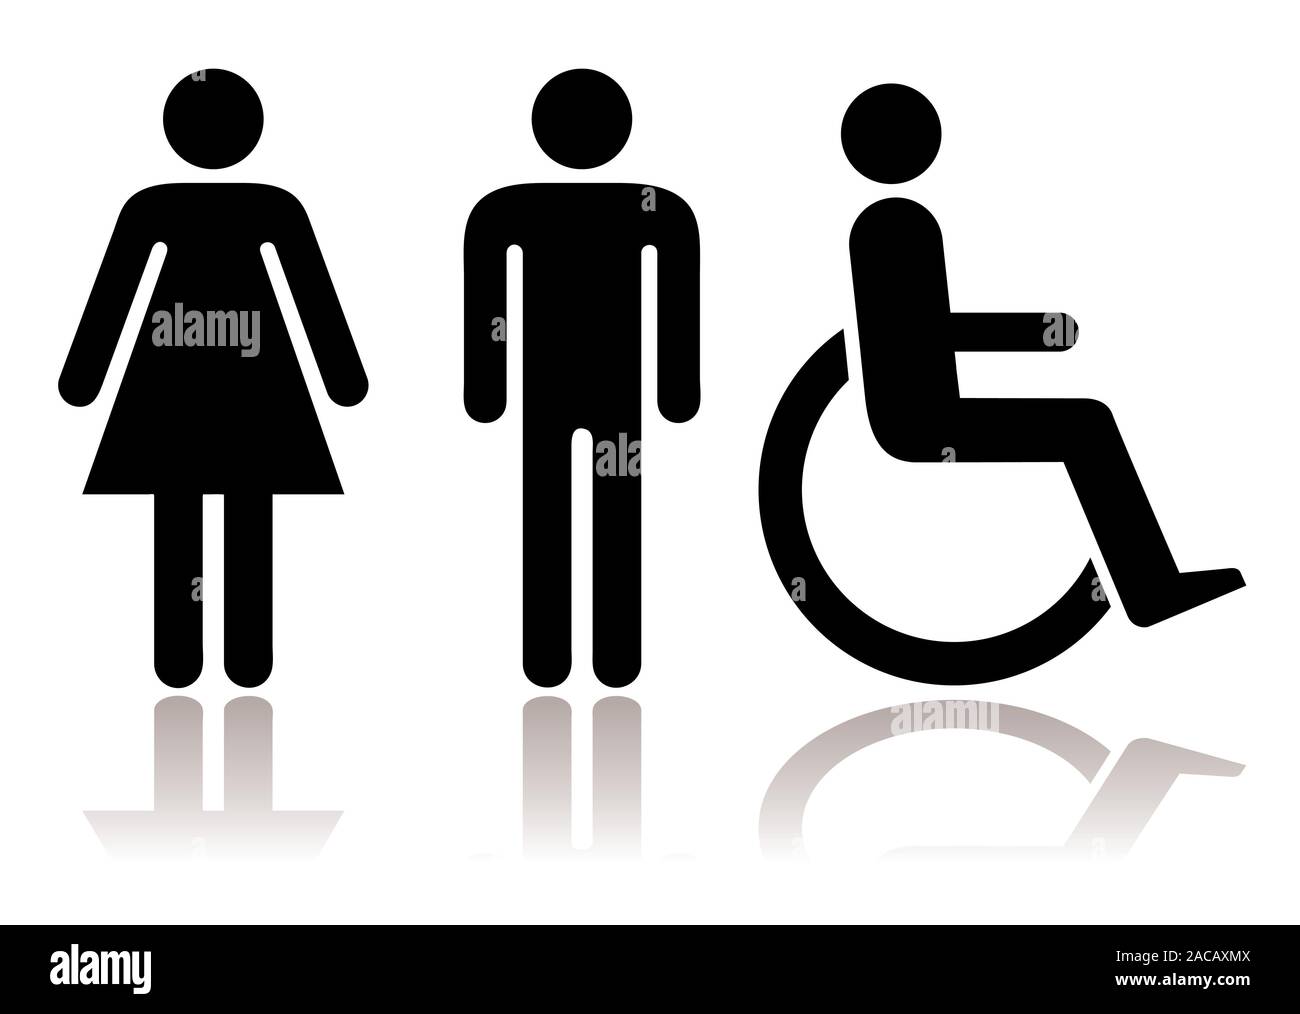 Toilet symbols disabled Stock Photo - Alamy